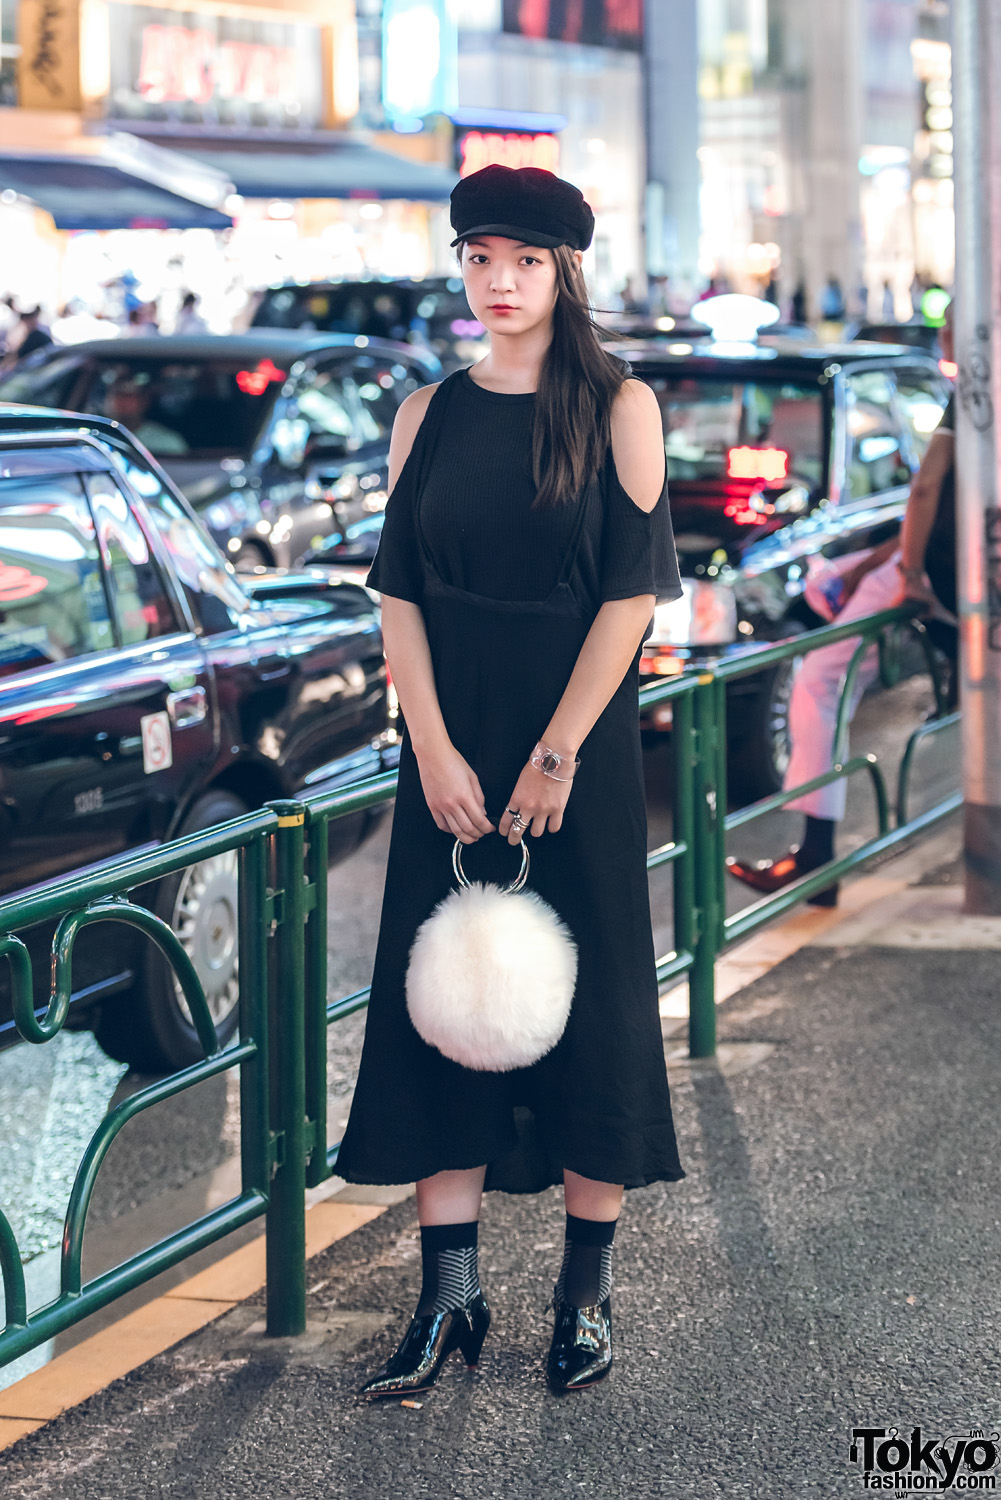 Minimalist Japanese Streetwear in Harajuku w/ Yohji Yamamoto, Issey Miyake & A White Zara Fuzzy Handbag